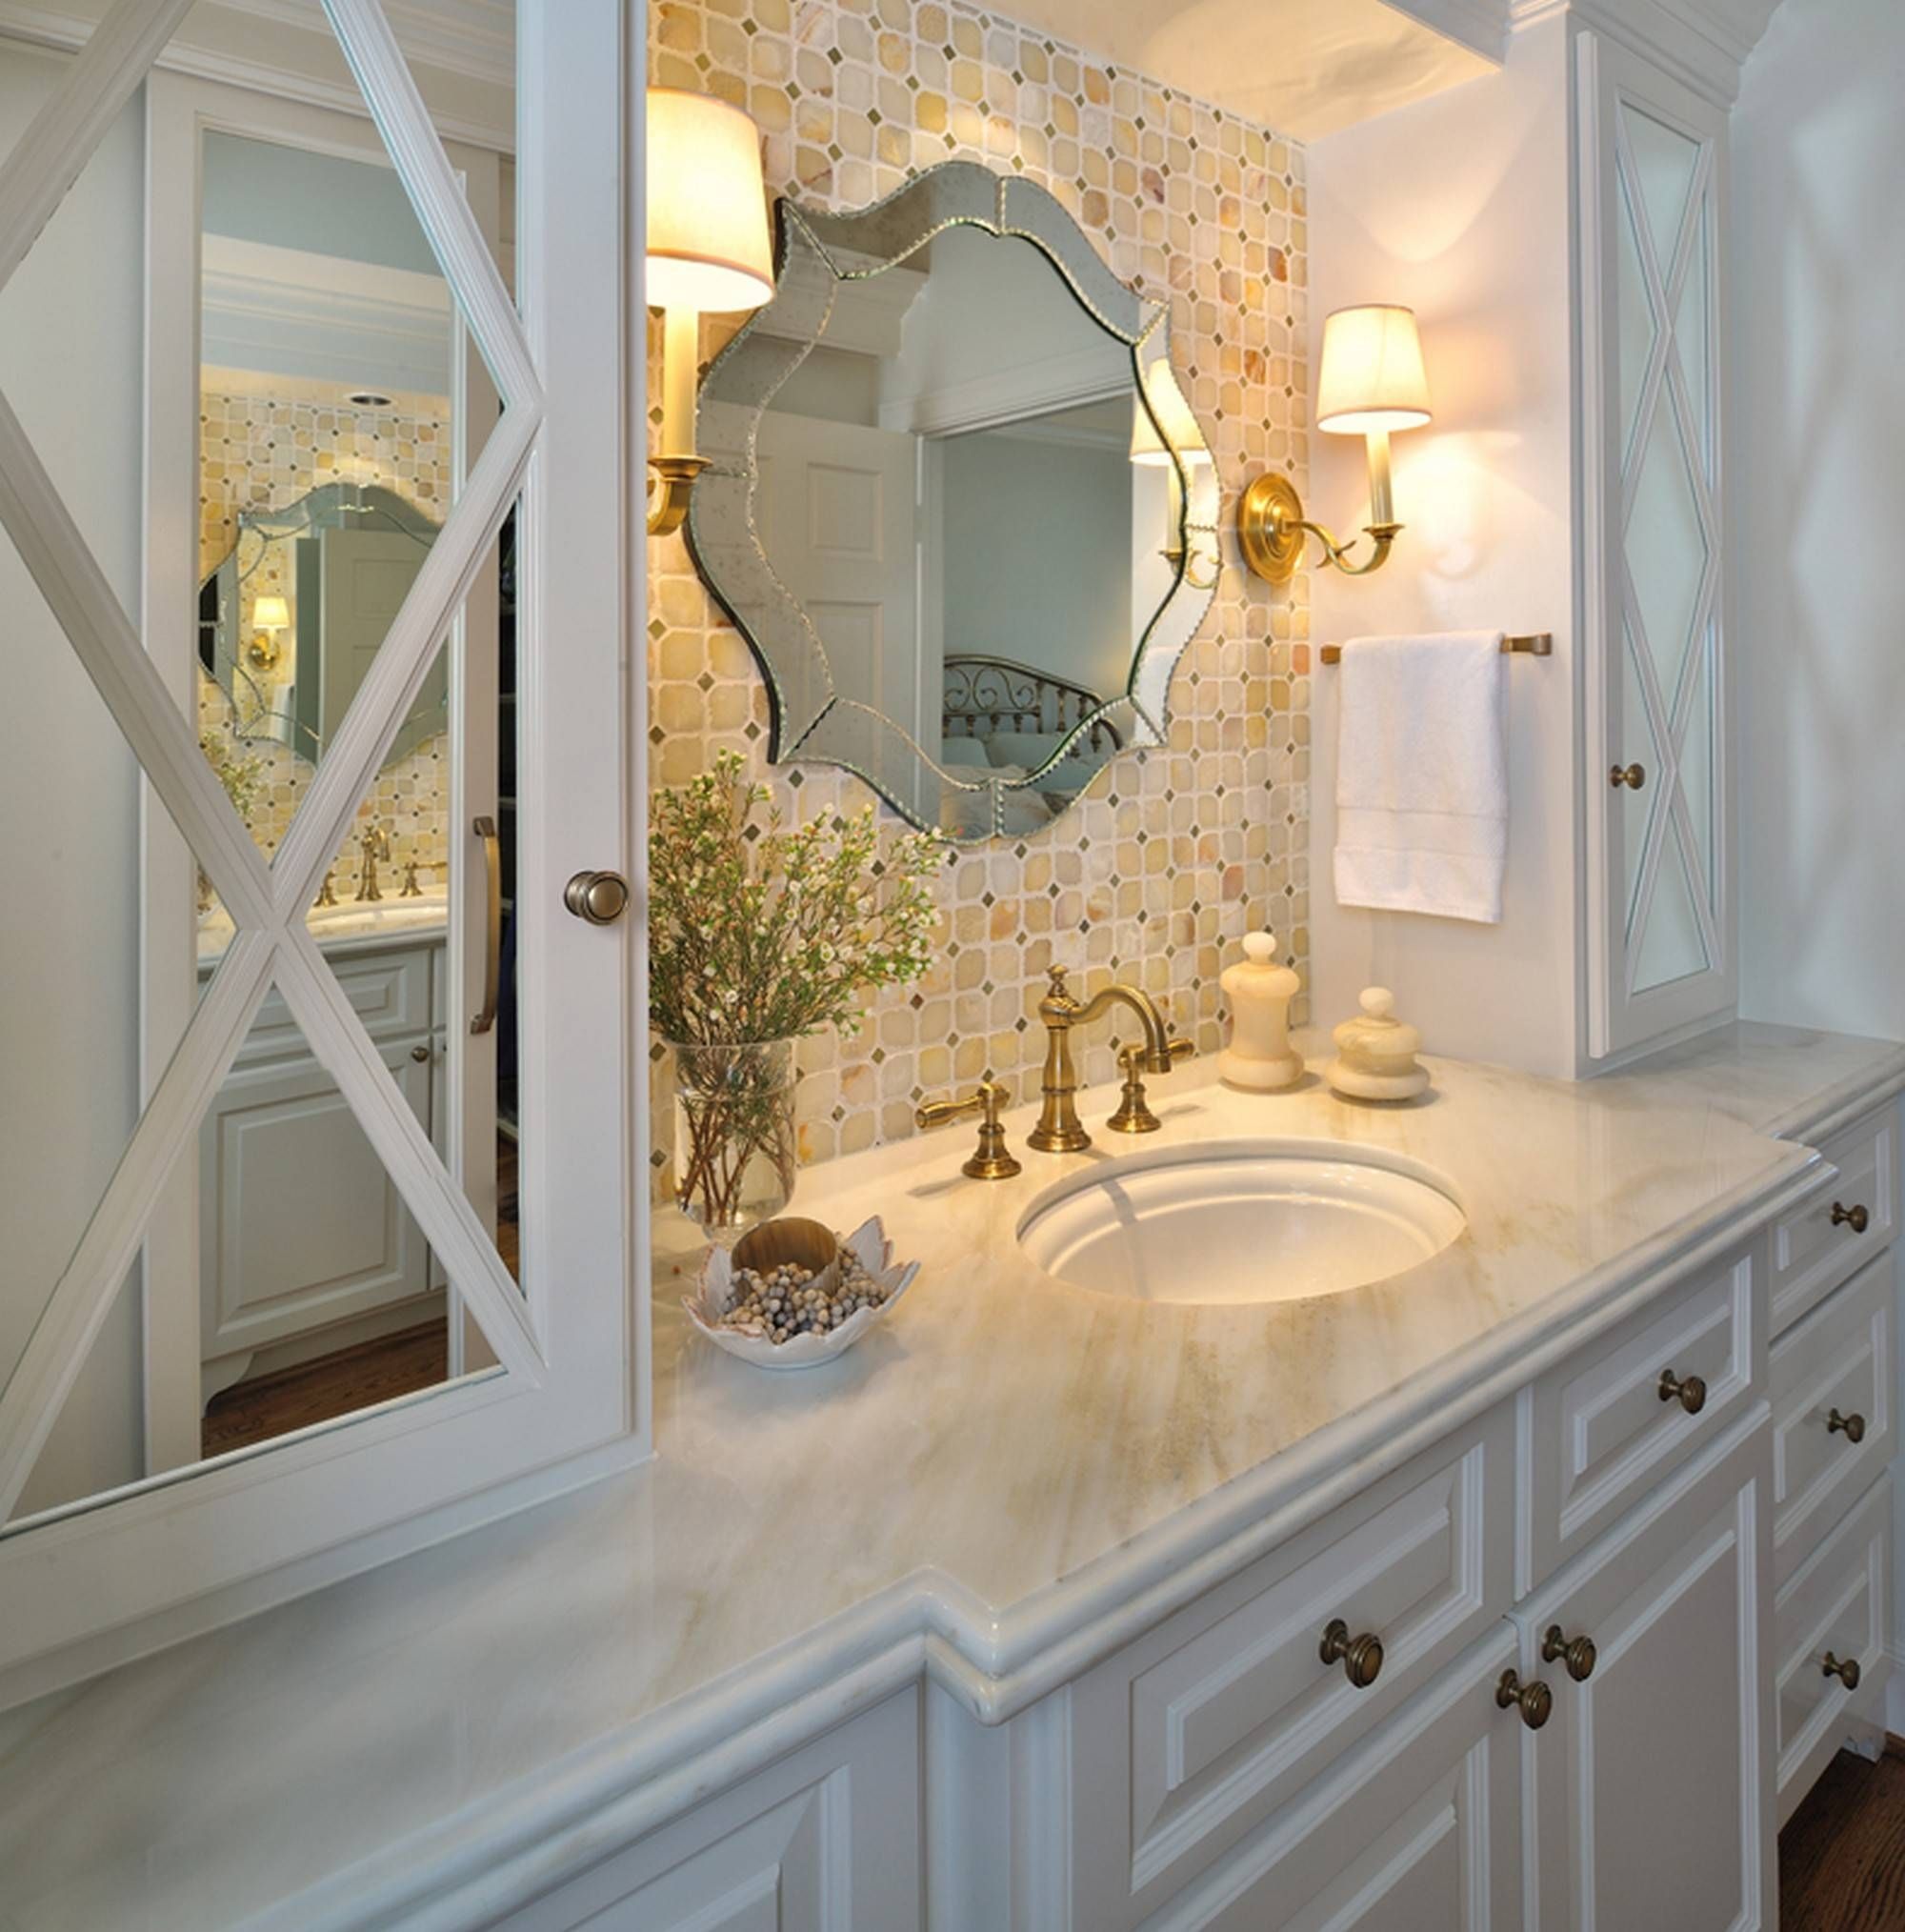 Exquisite Antique Bathroom With Unique Bathroom Mirror – Amidug Throughout Antique Mirrors For Bathrooms (View 7 of 15)